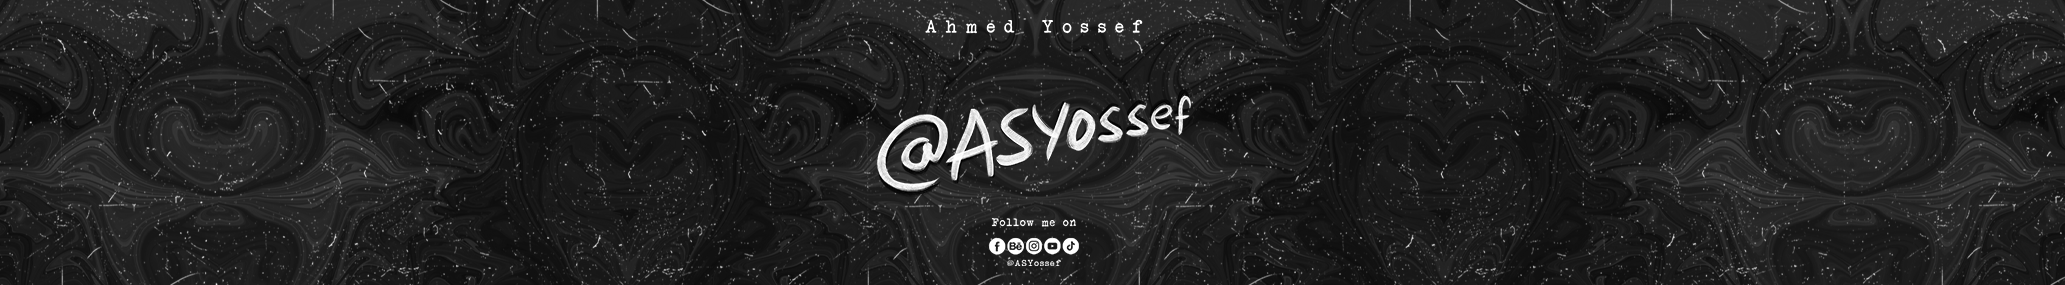 Ahmed S. Yossef's profile banner